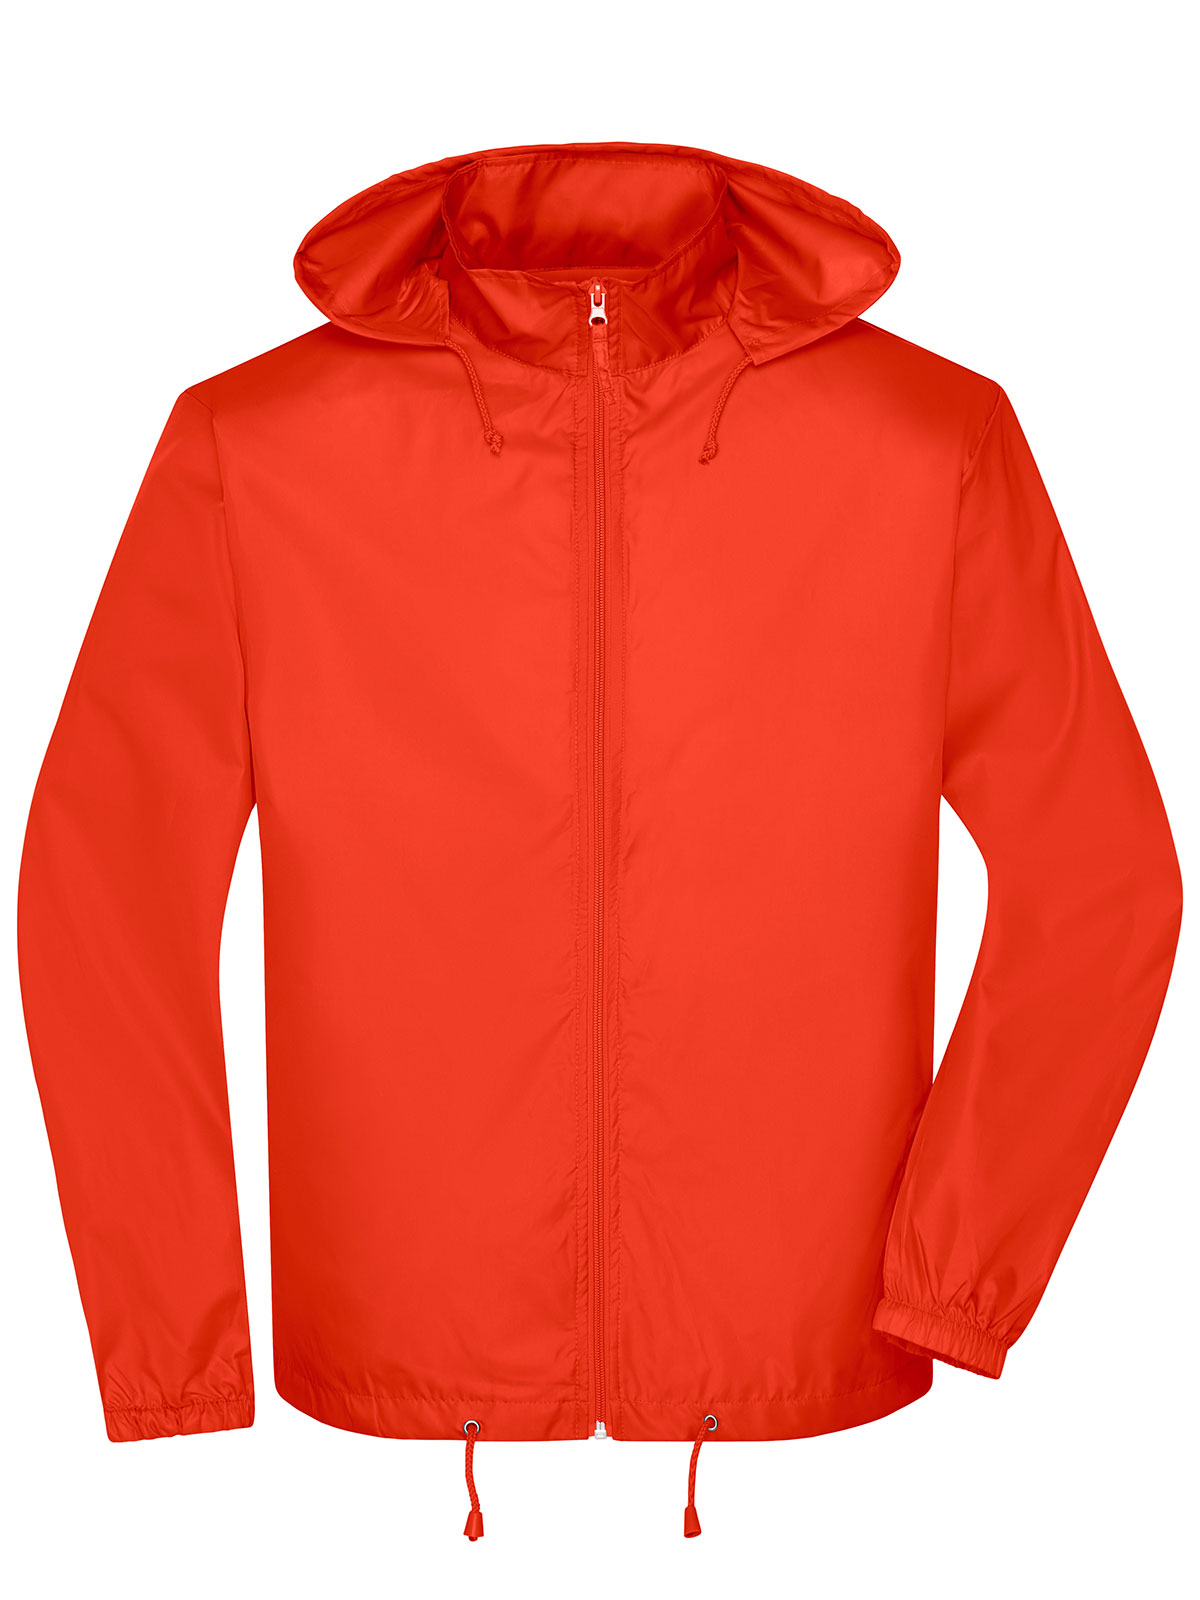 mens-promo-jacket-bright-orange.webp